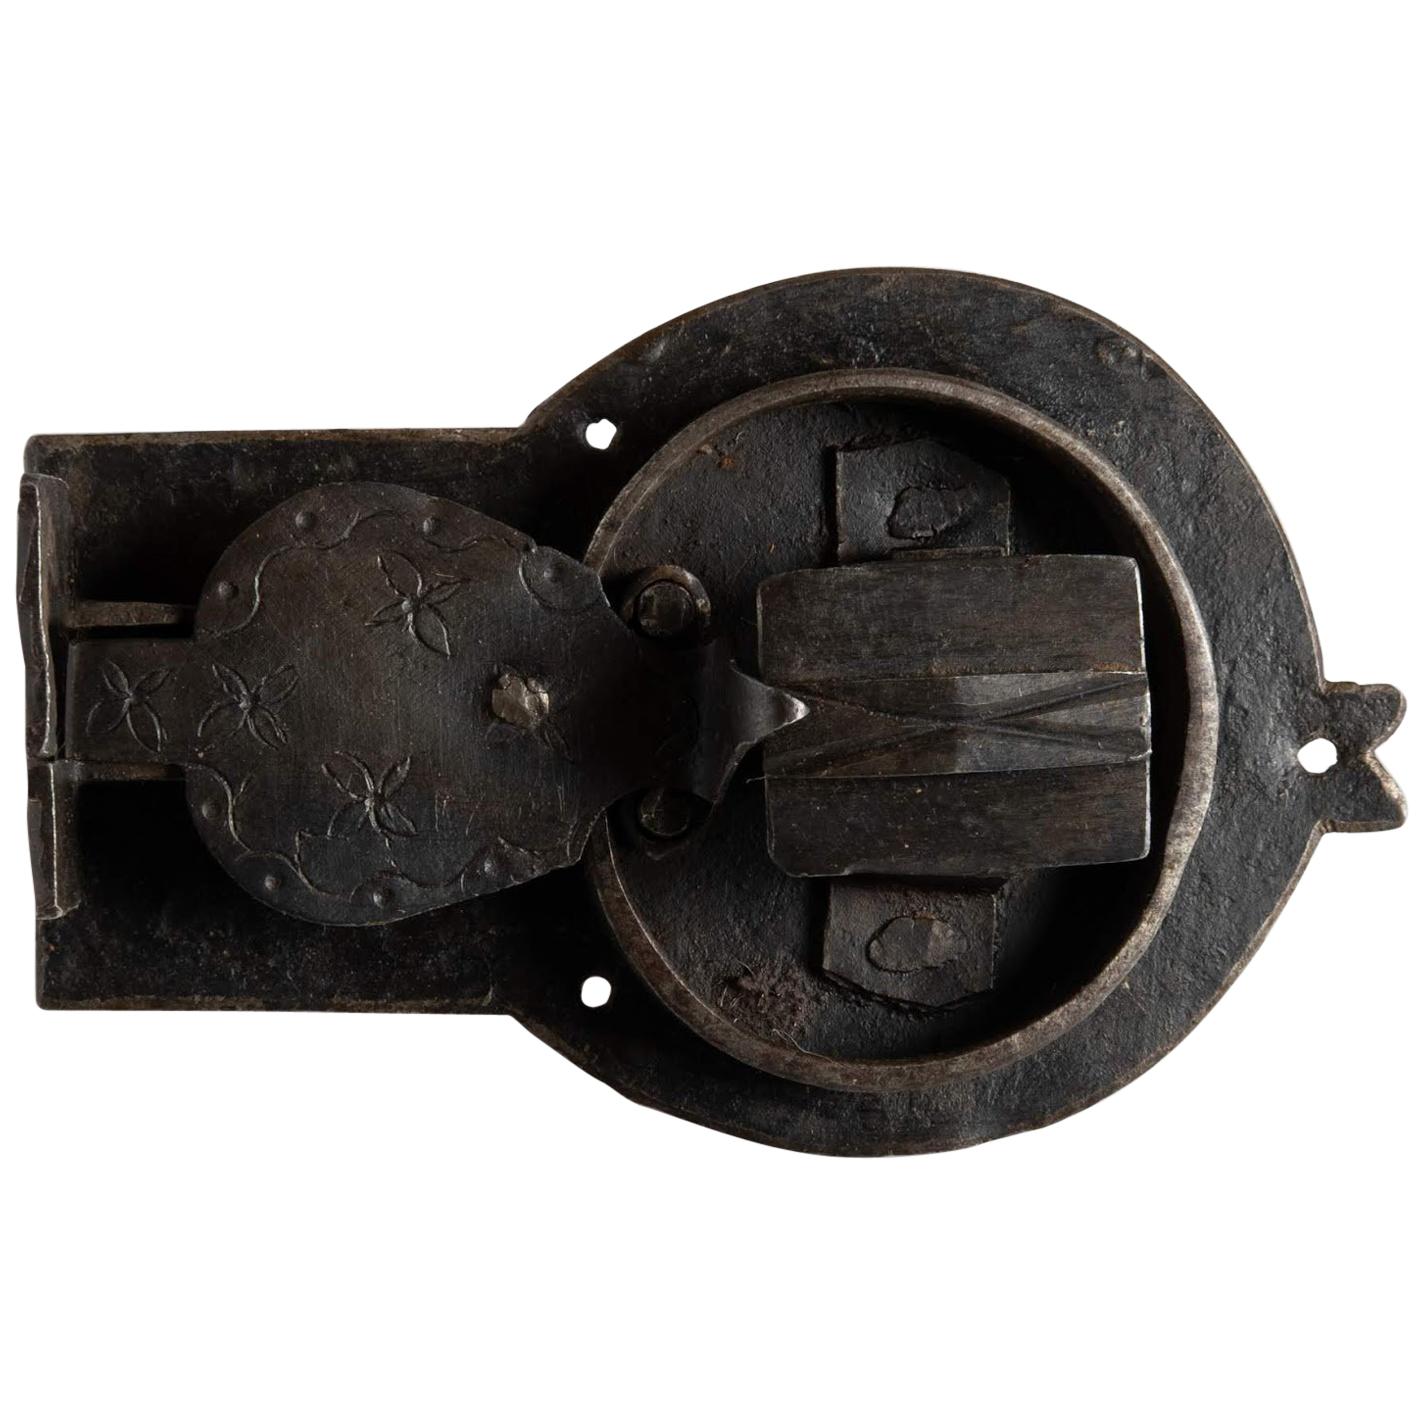 Primitive Handwrought Decorative Lock with It's Original Key, Italy, circa 1600 For Sale